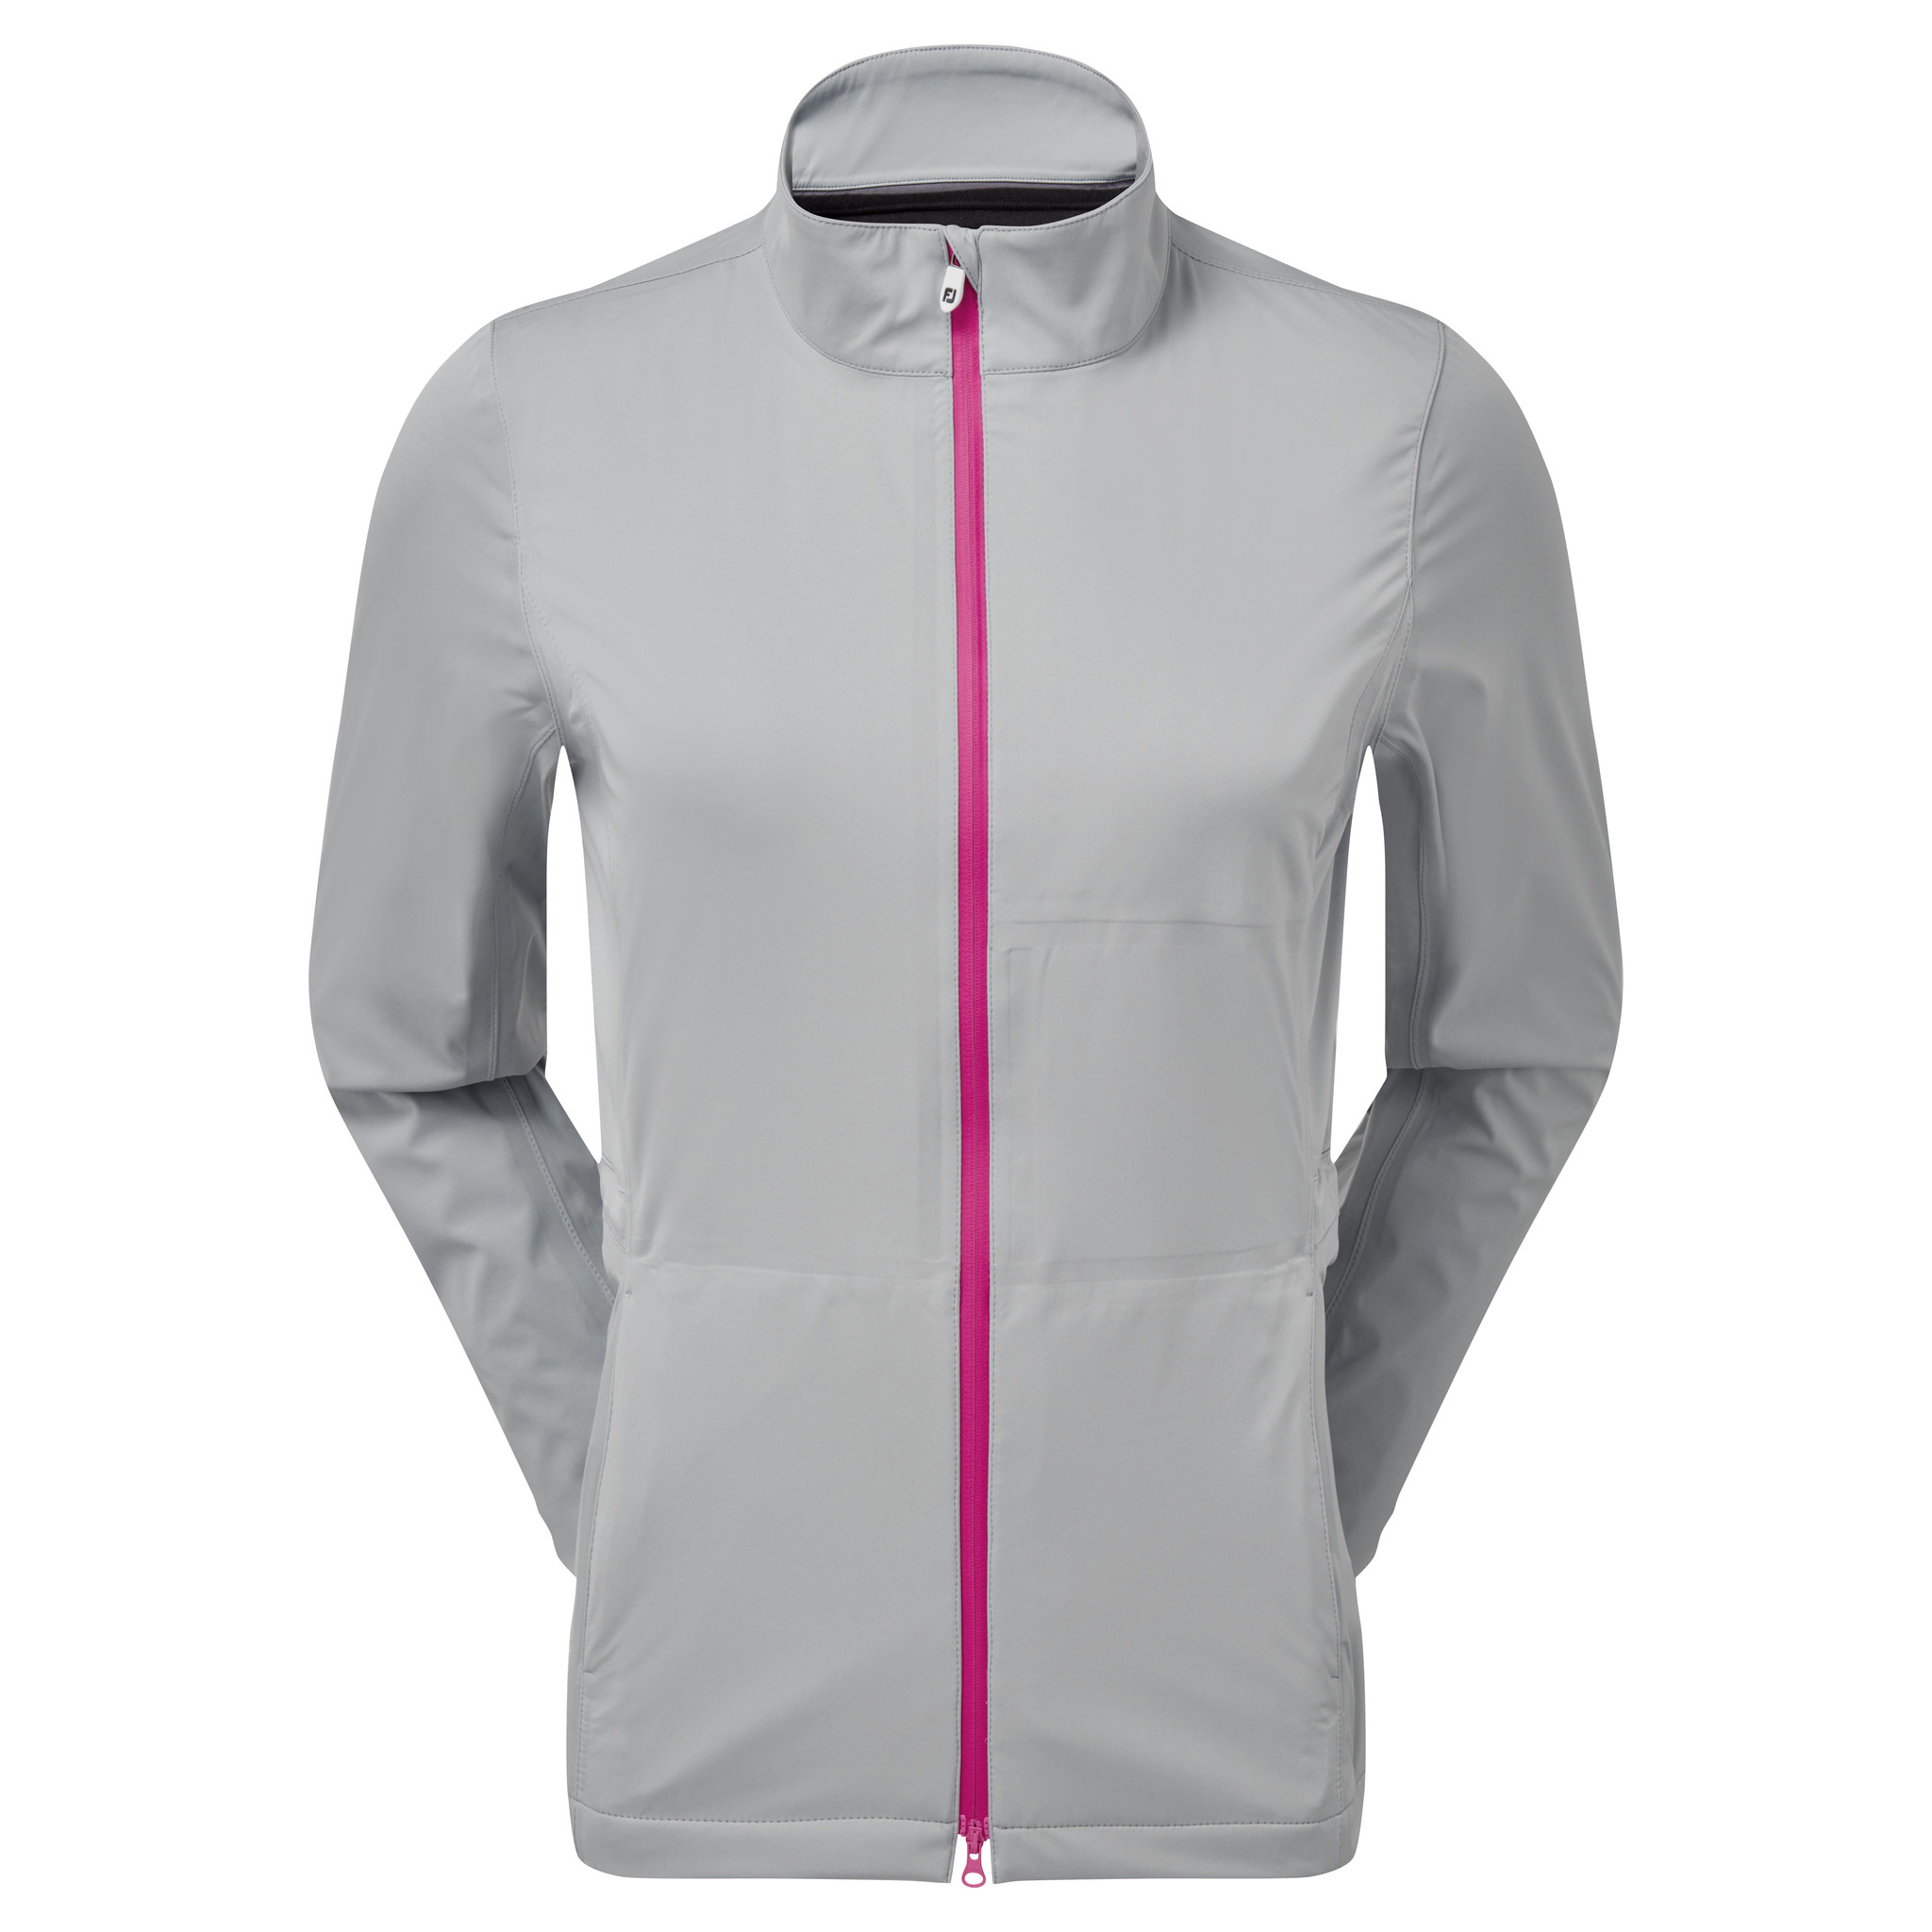 Footjoy | 87996 | Women | HydroKnit Jacket | Grey with Hot Pink